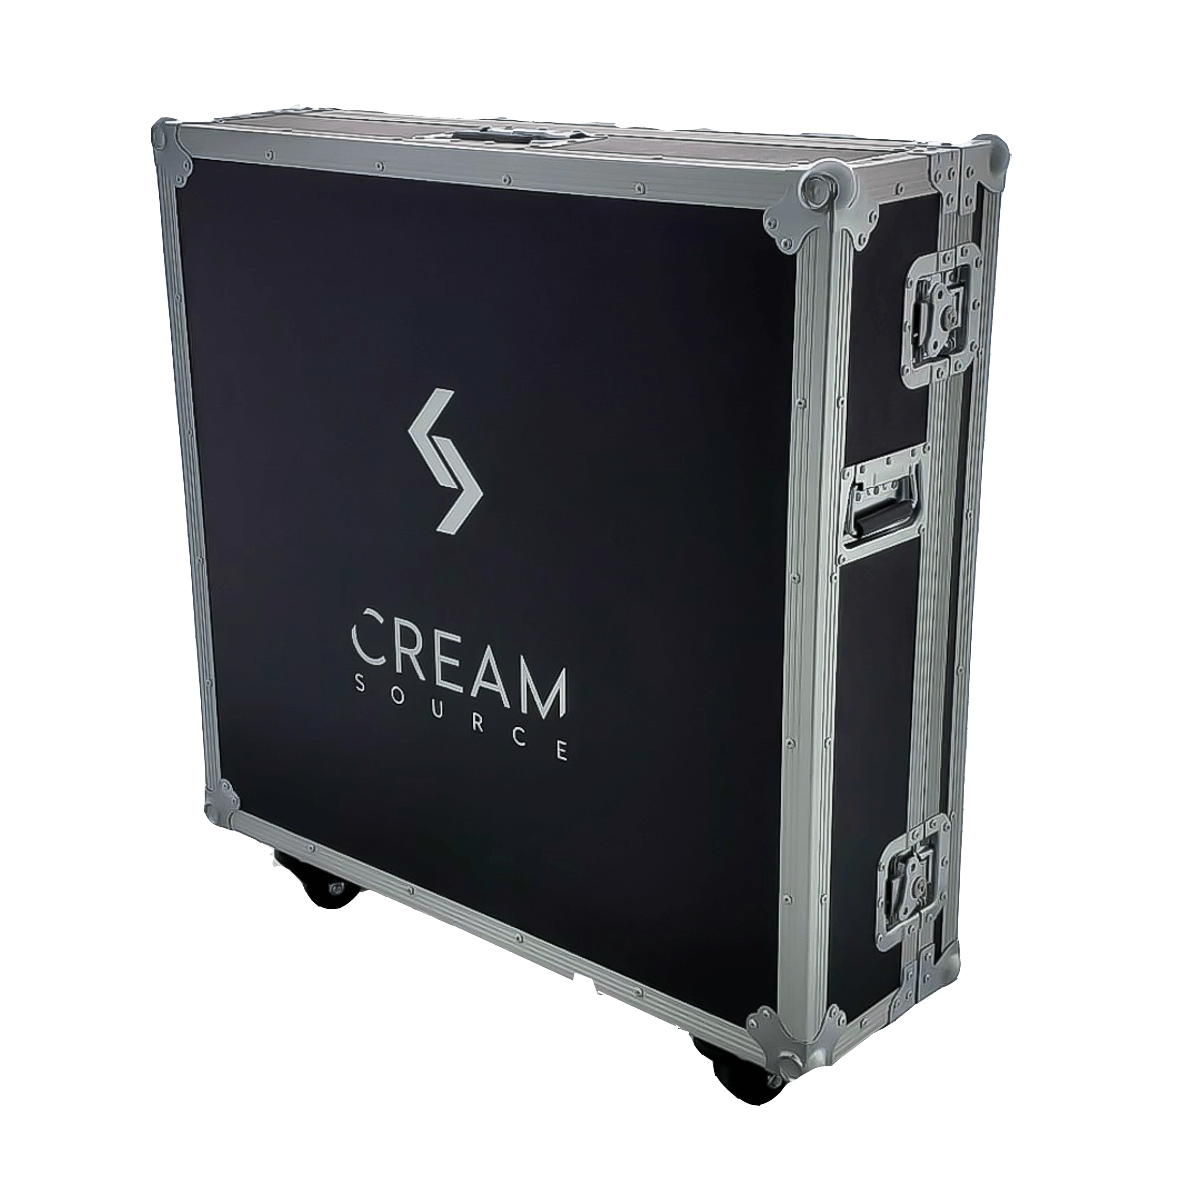 Creamsource SpaceX Hardcase inc Foam